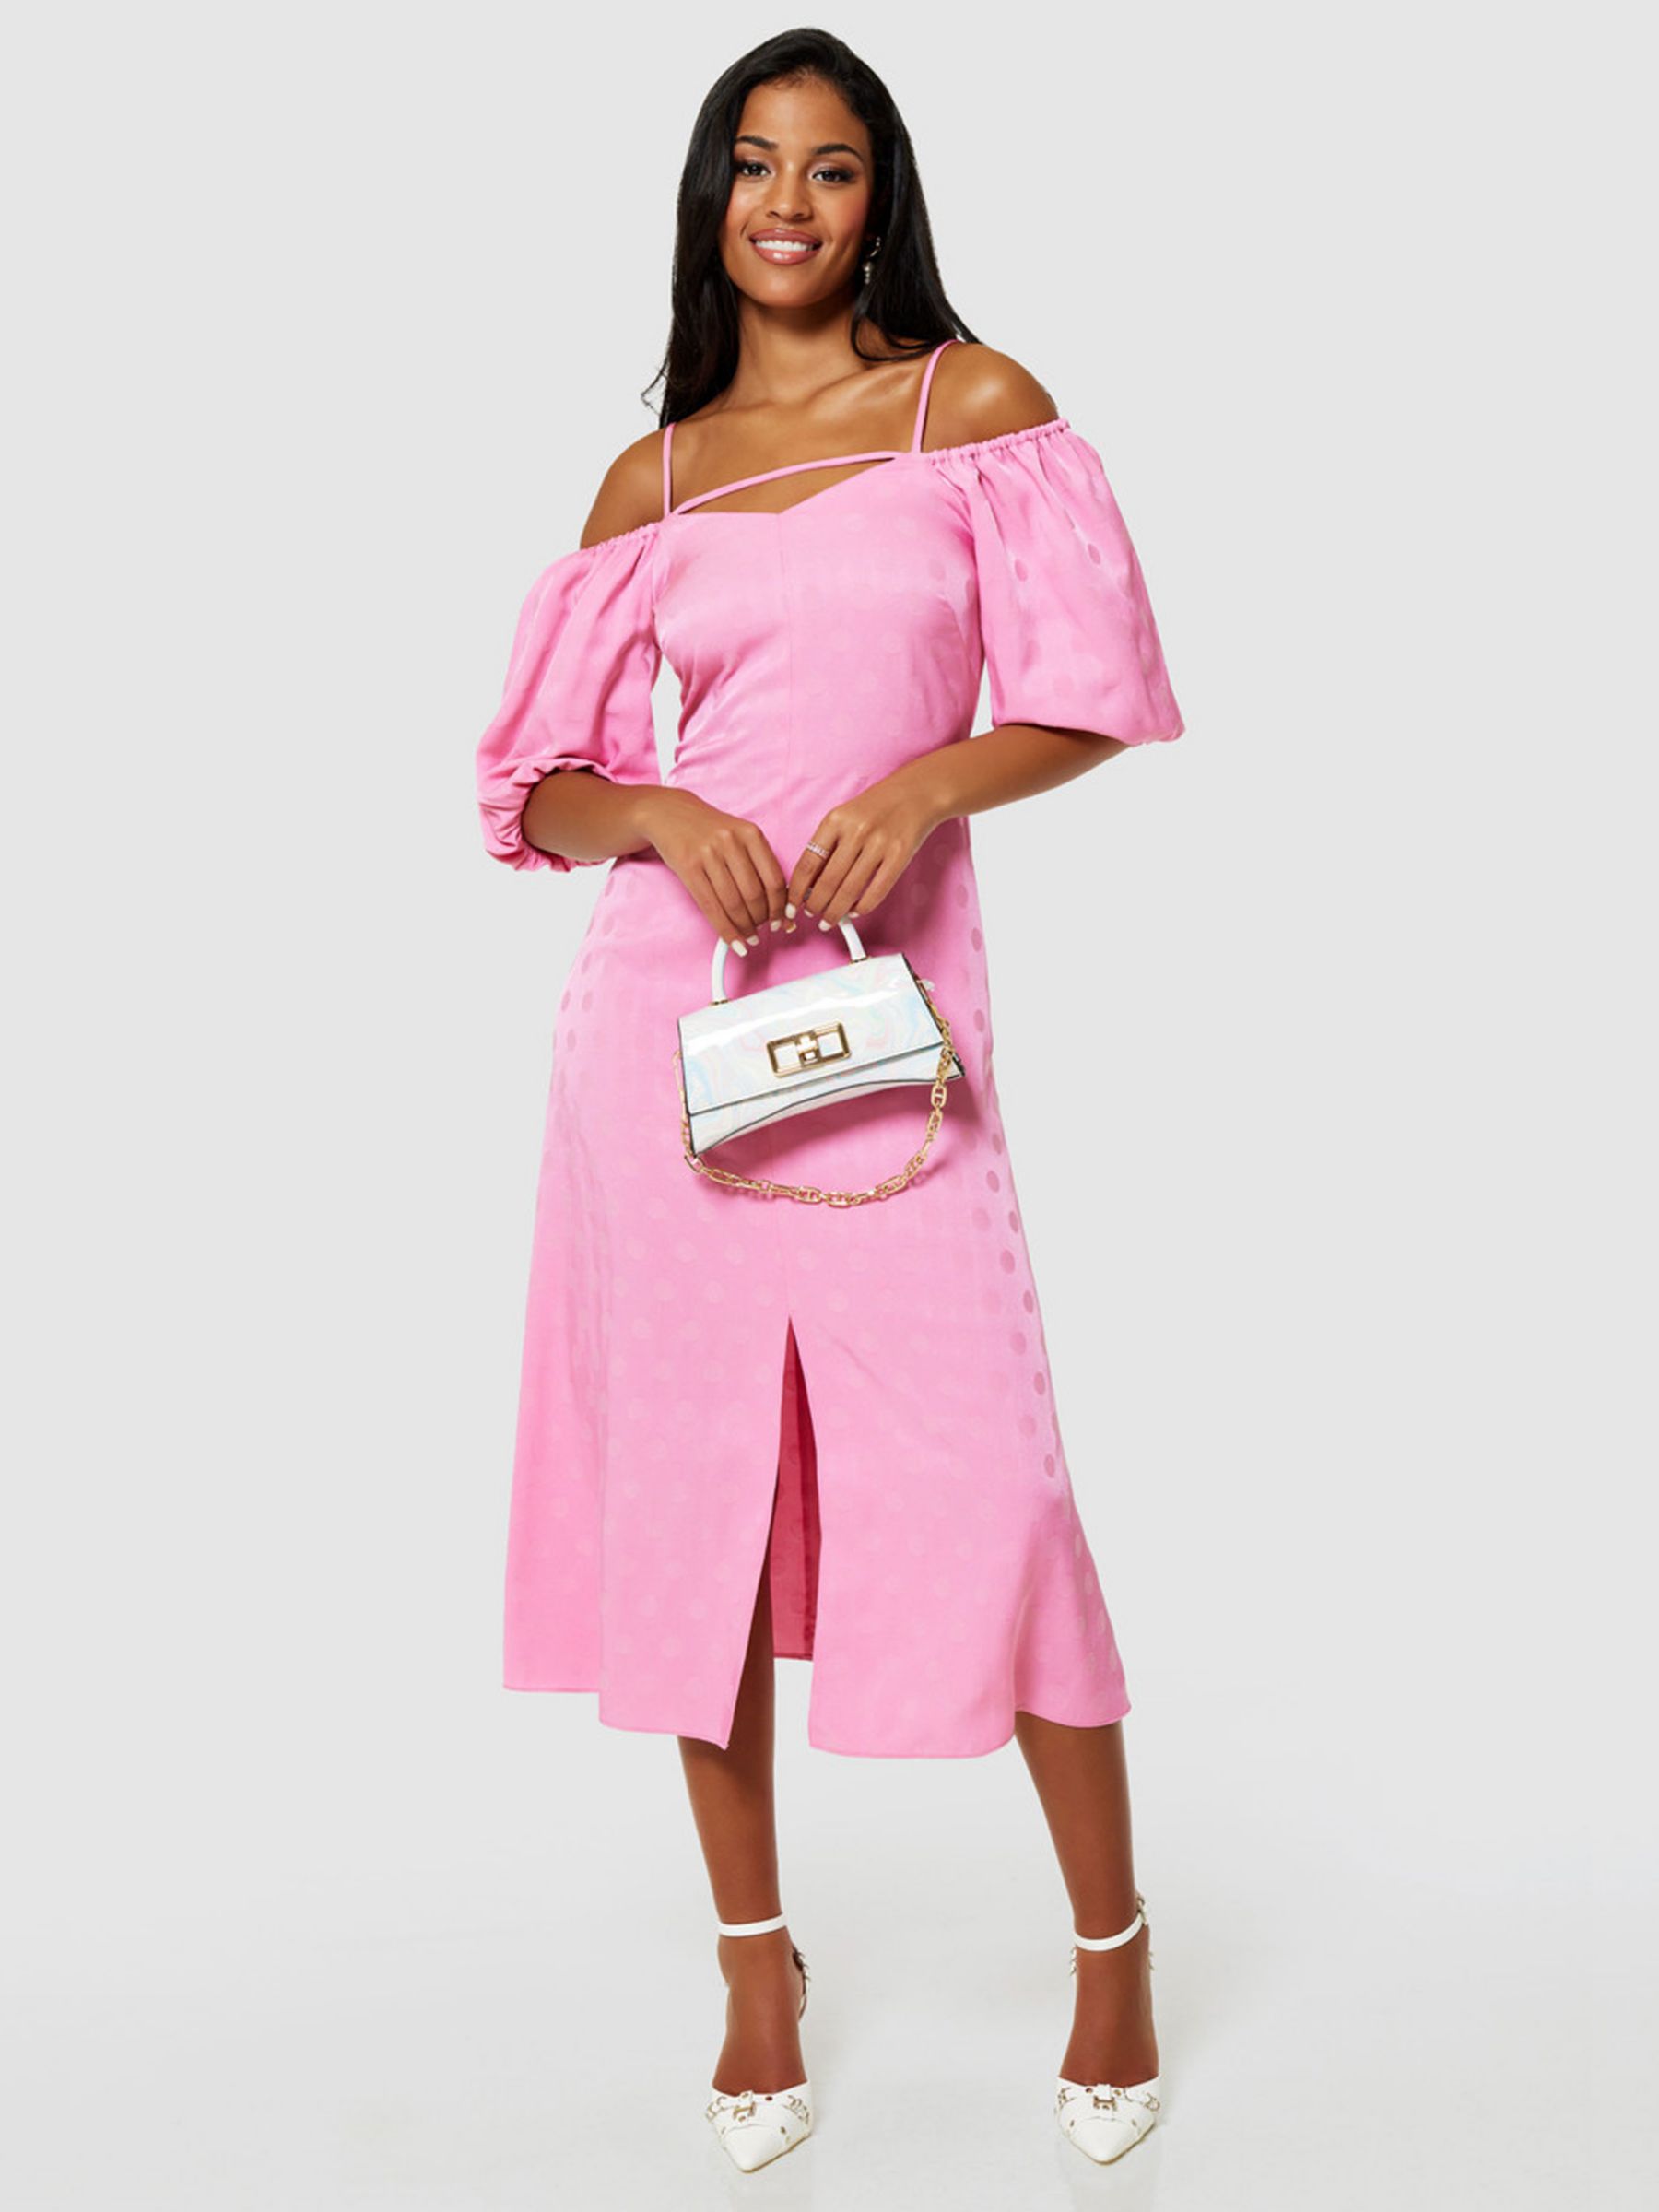 Closet London Polka Dot Jacquard A-Line Midi Dress, Pink, 16